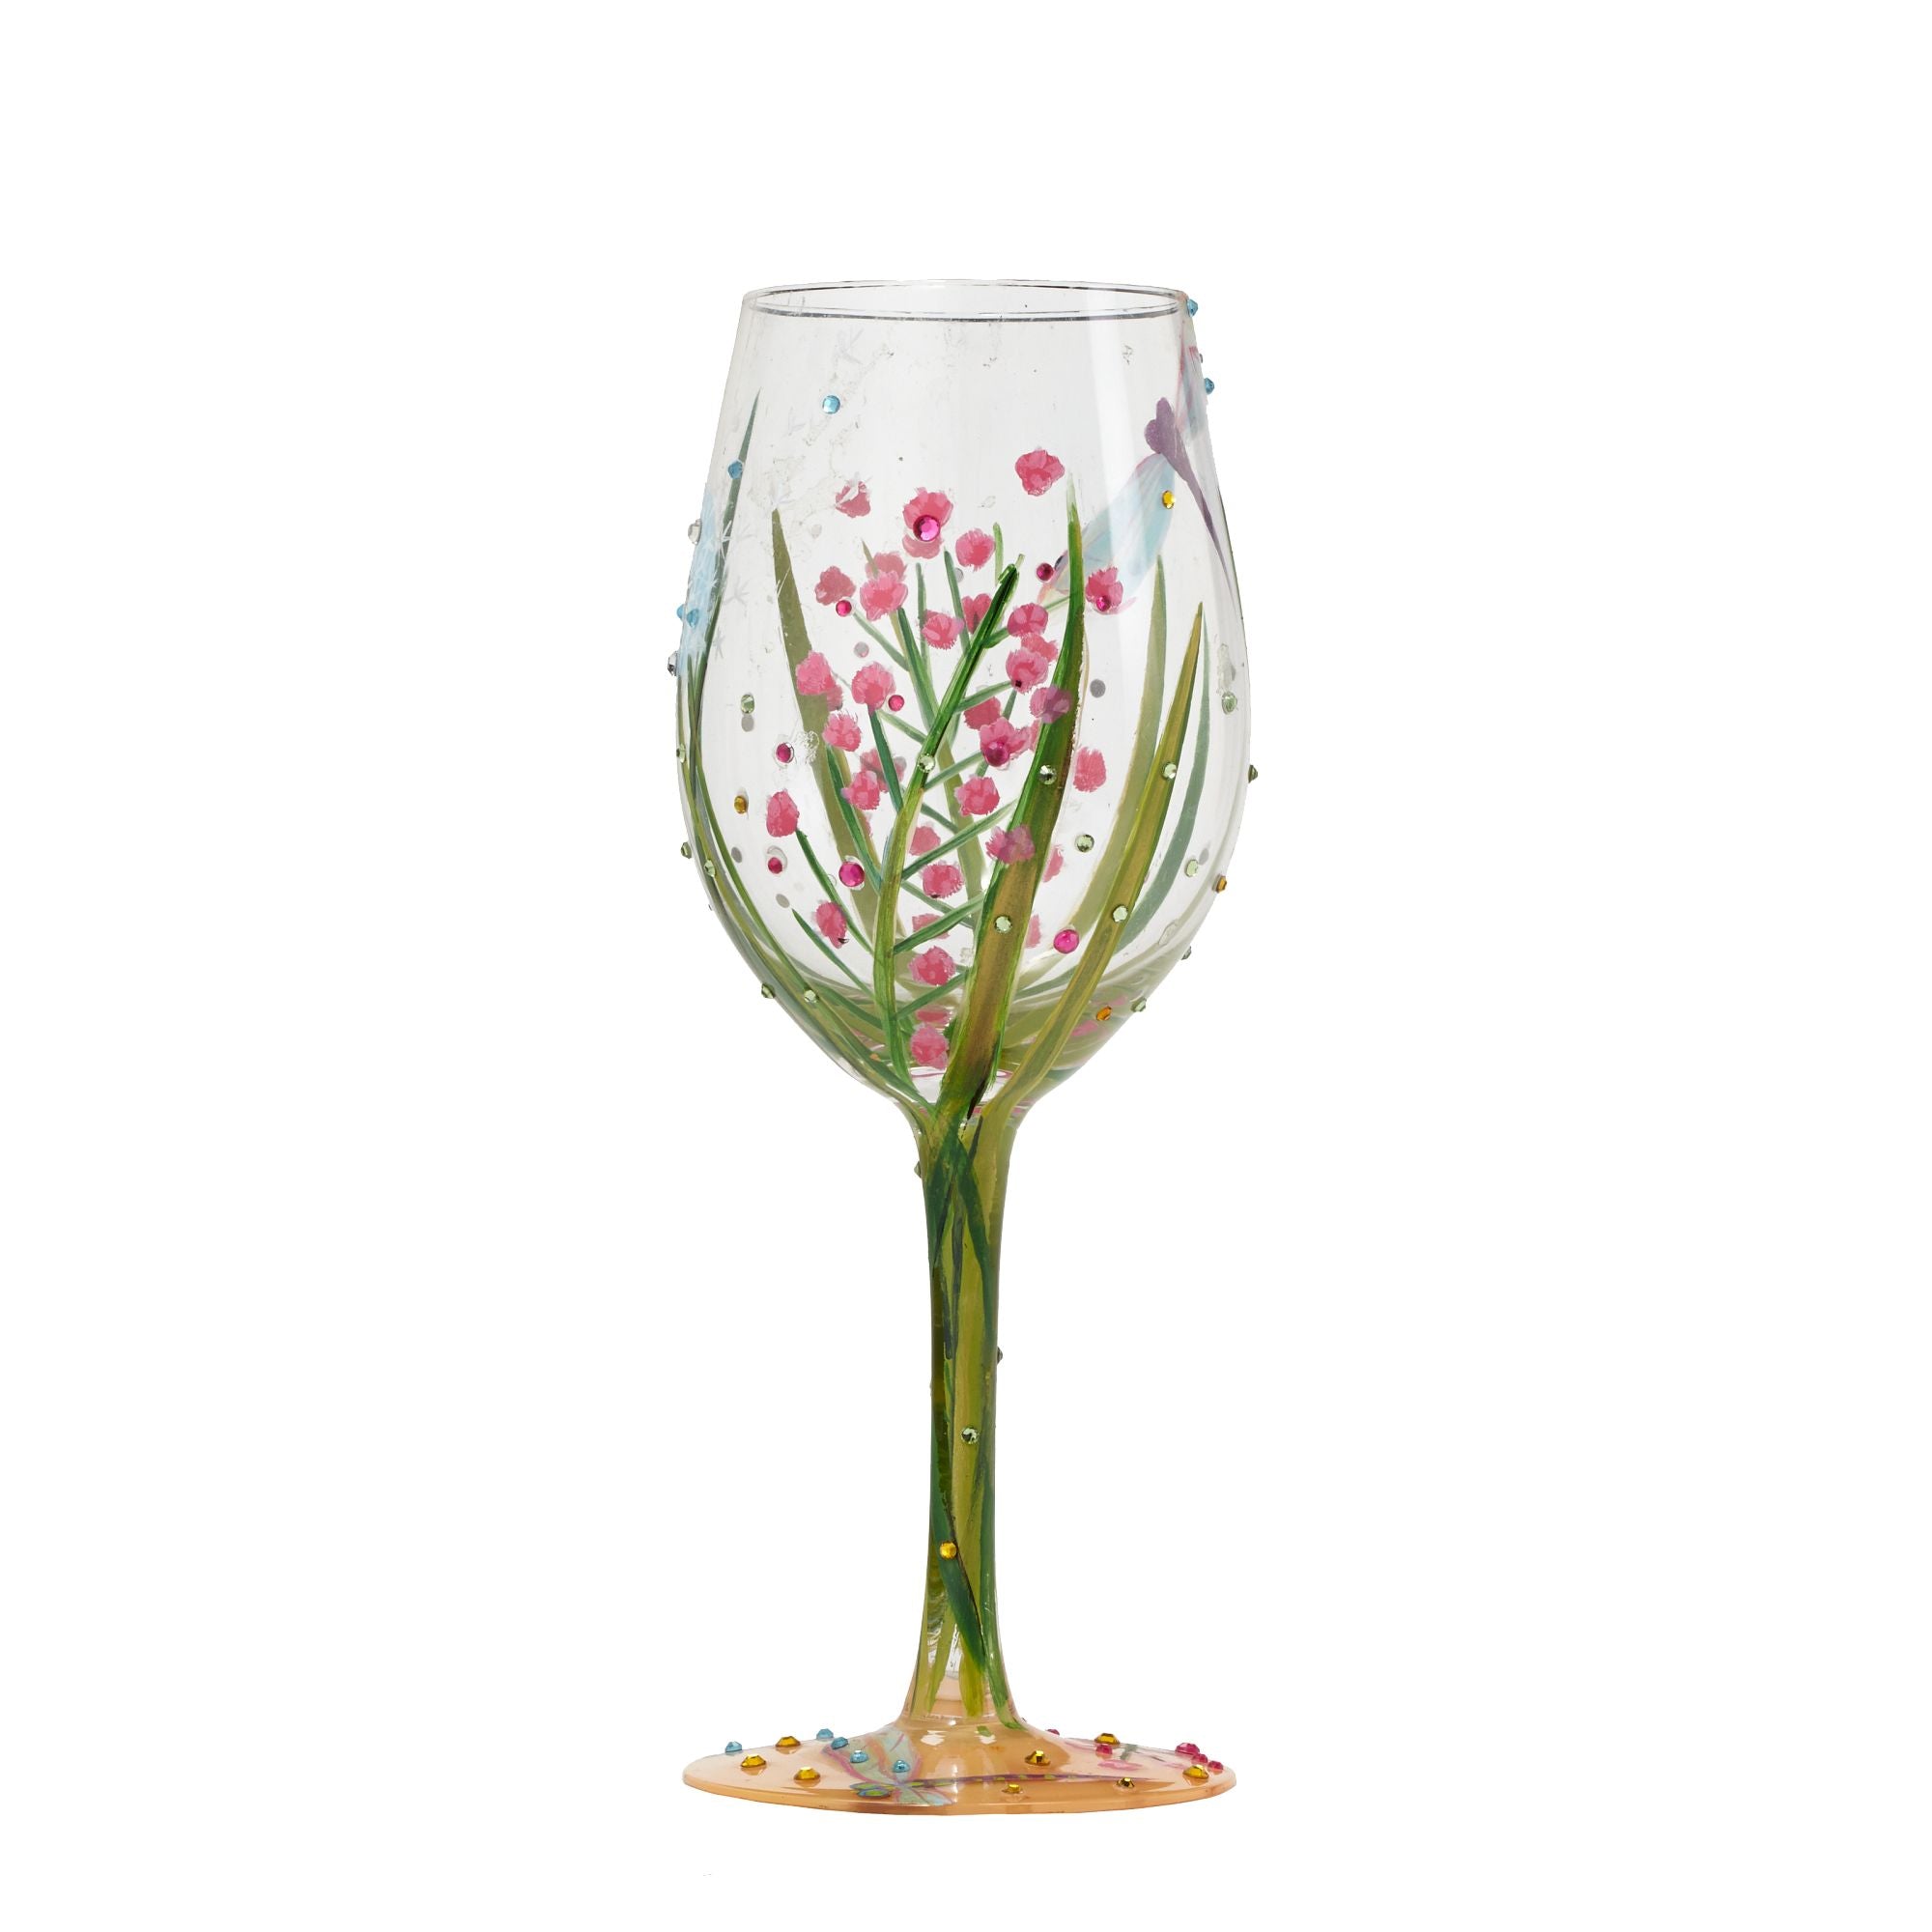 Leopard Print Wine Glass Glasses With Black Stem Great Gift -    Printed wine glasses, Hand painted wine glasses, Fancy wine glasses